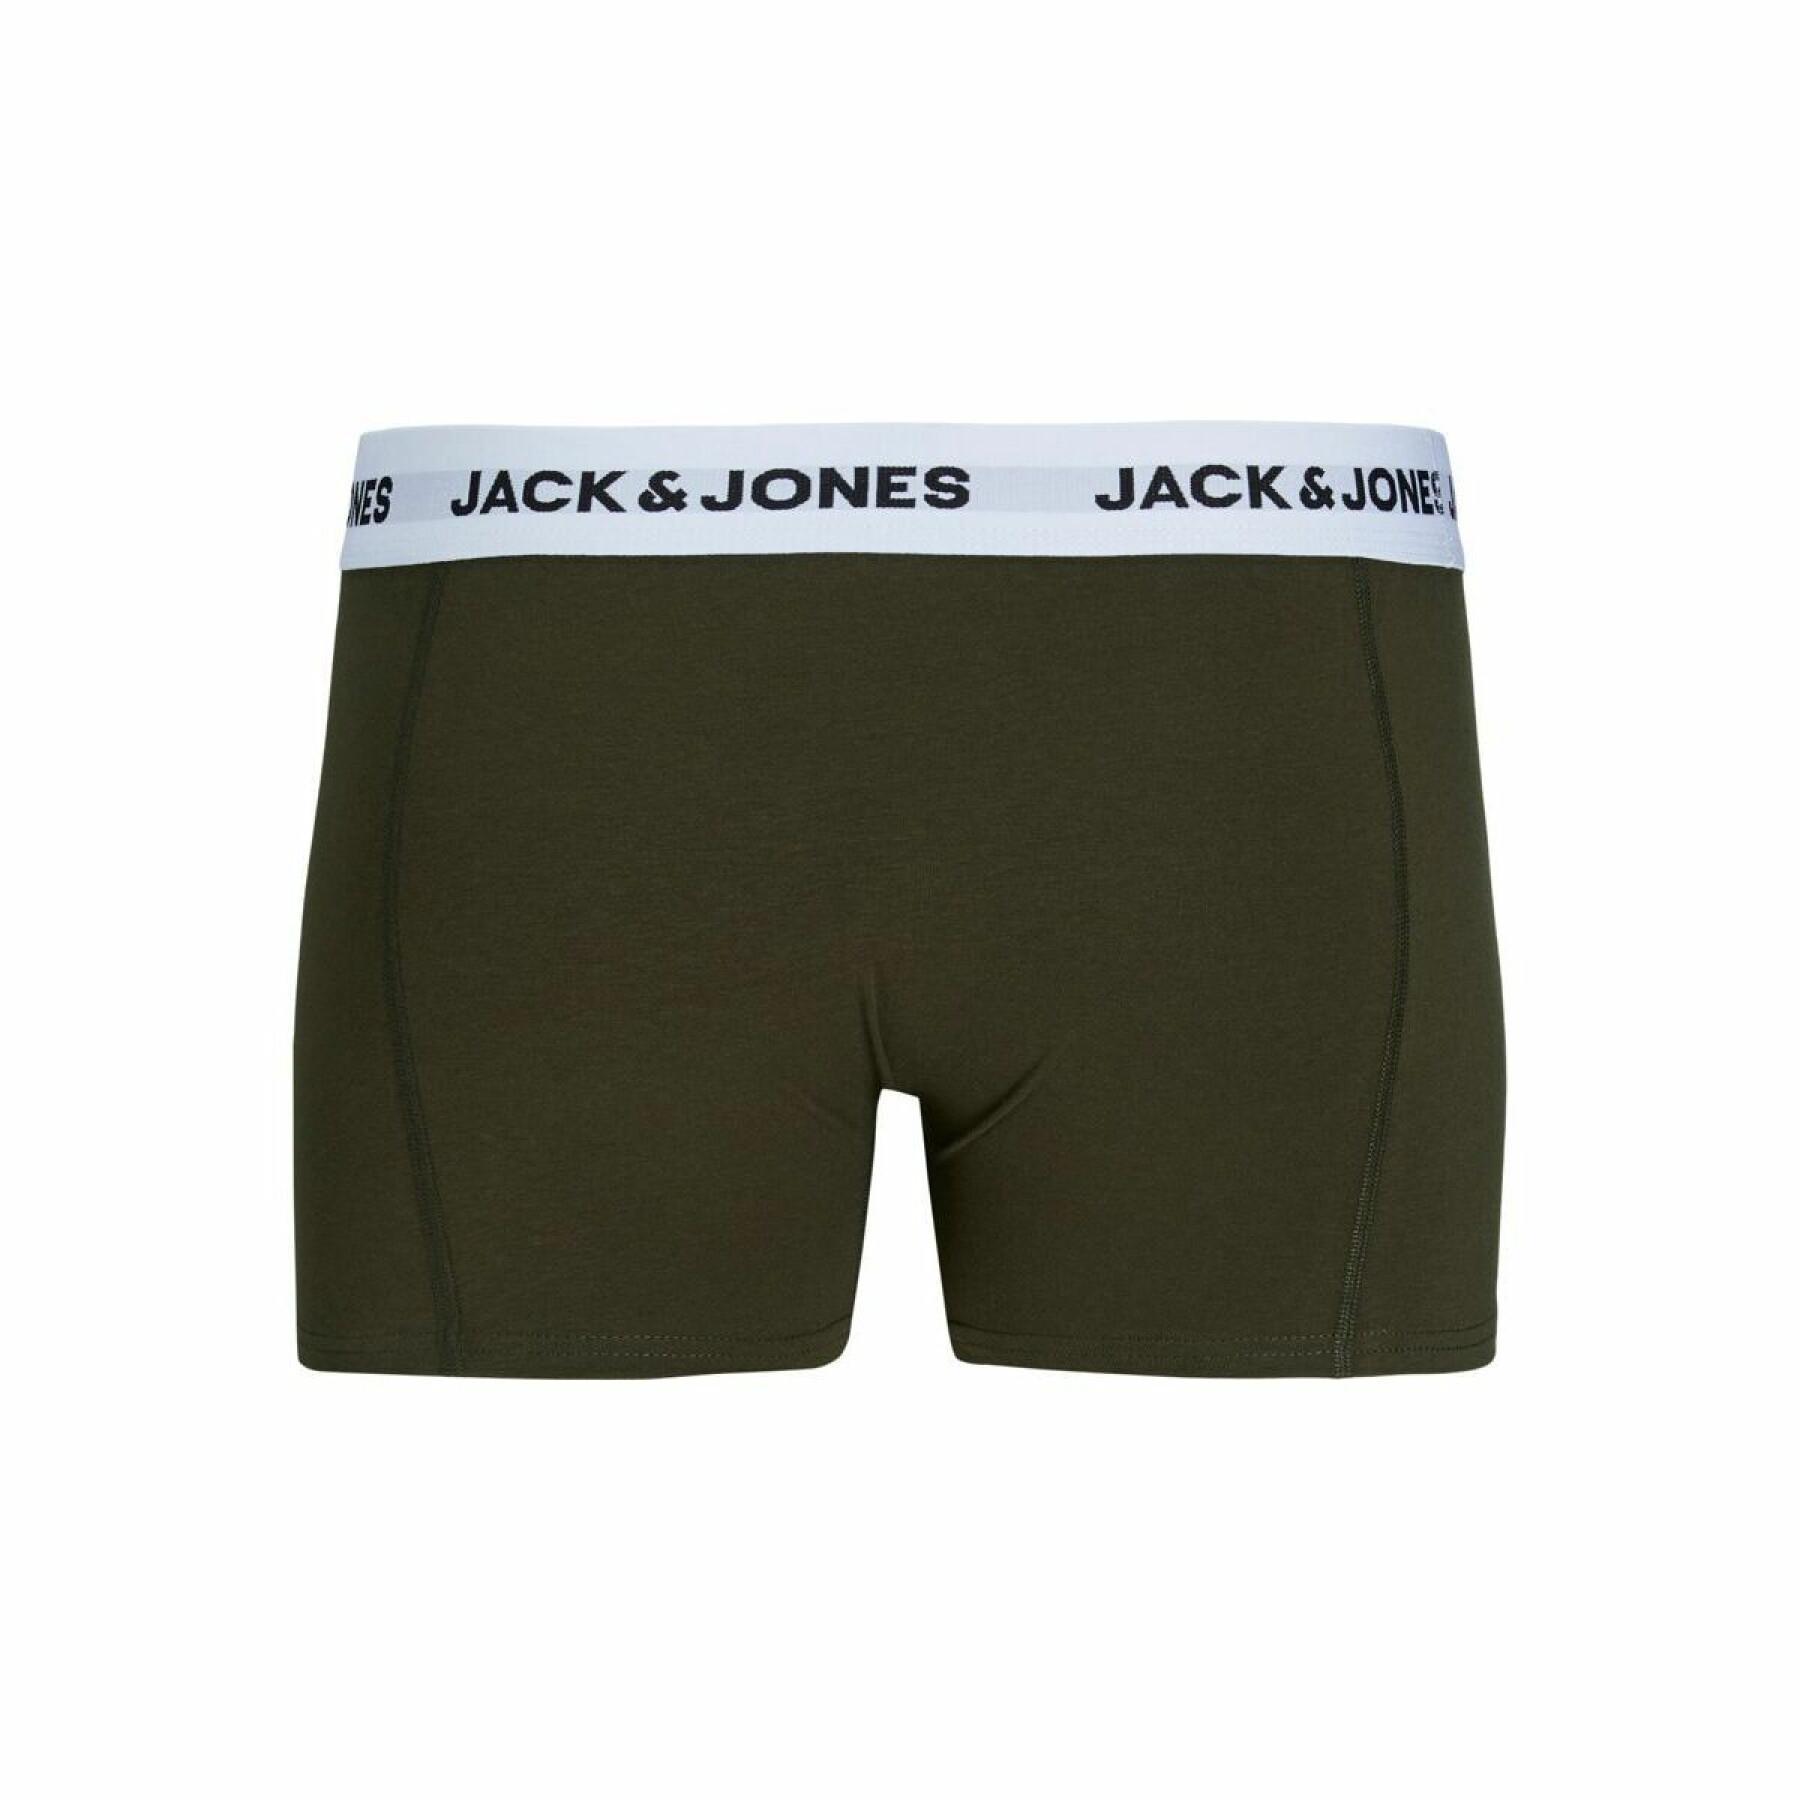 Lot de 5 boxers Jack & Jones Basic